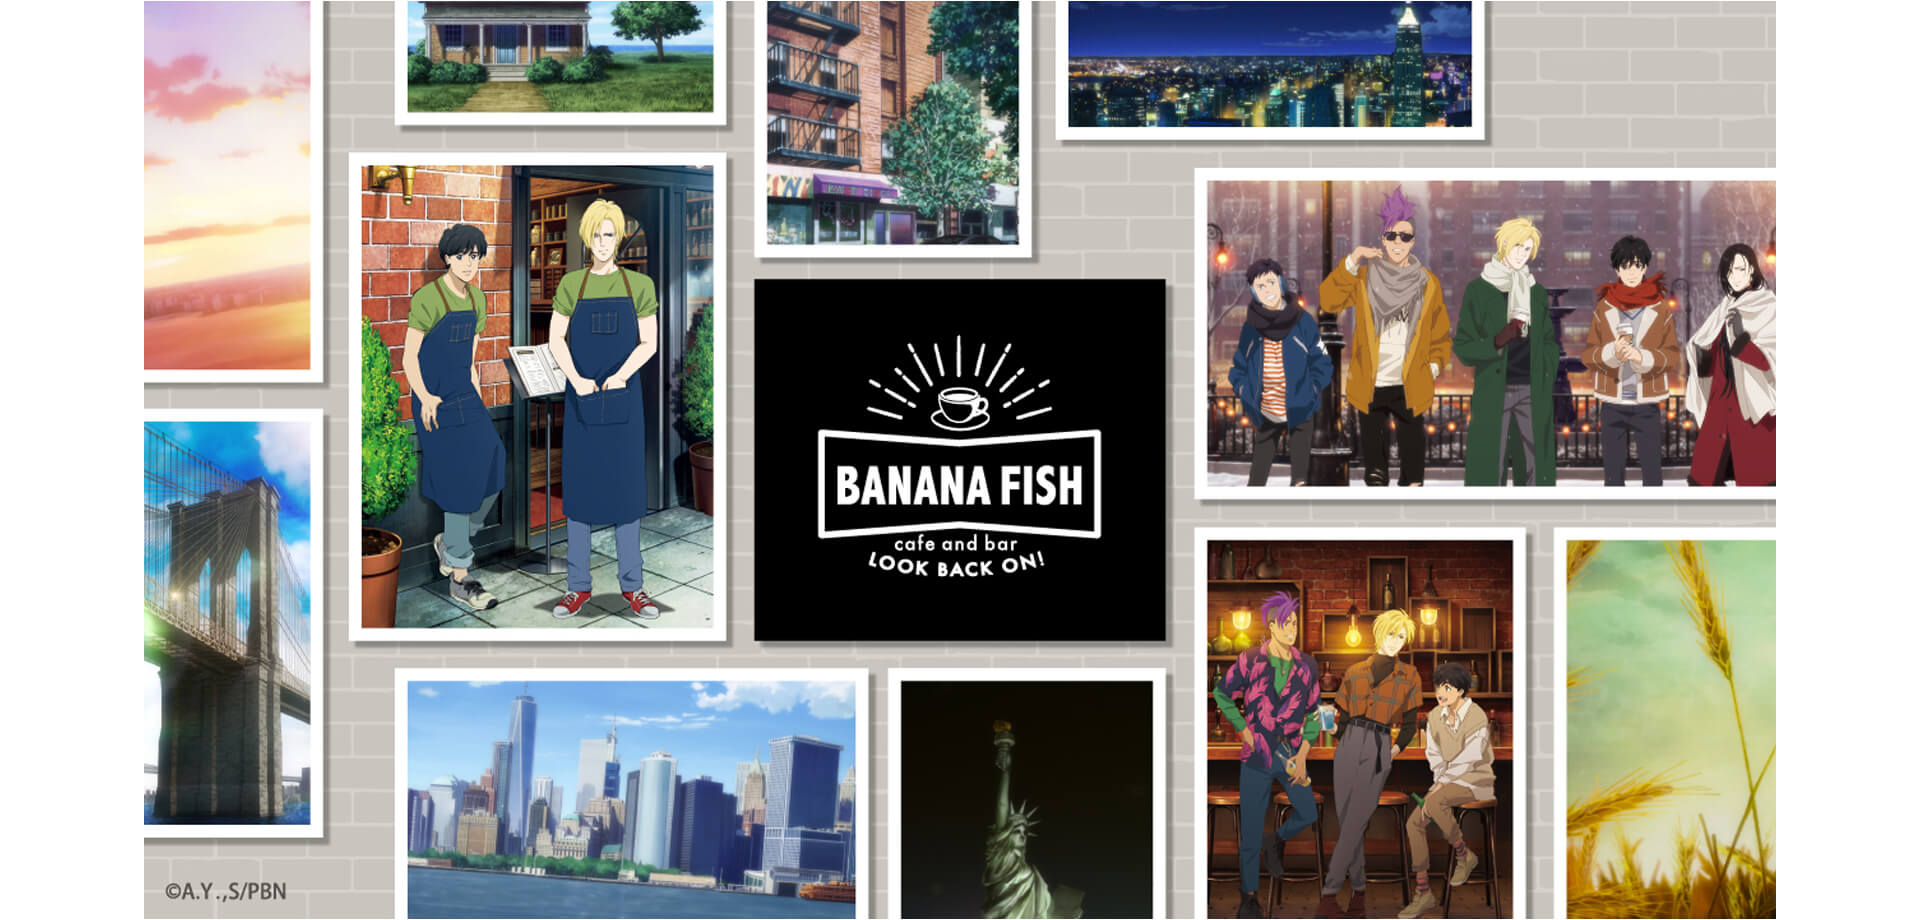 BANANA FISH Cafe and Bar -Look back on! -